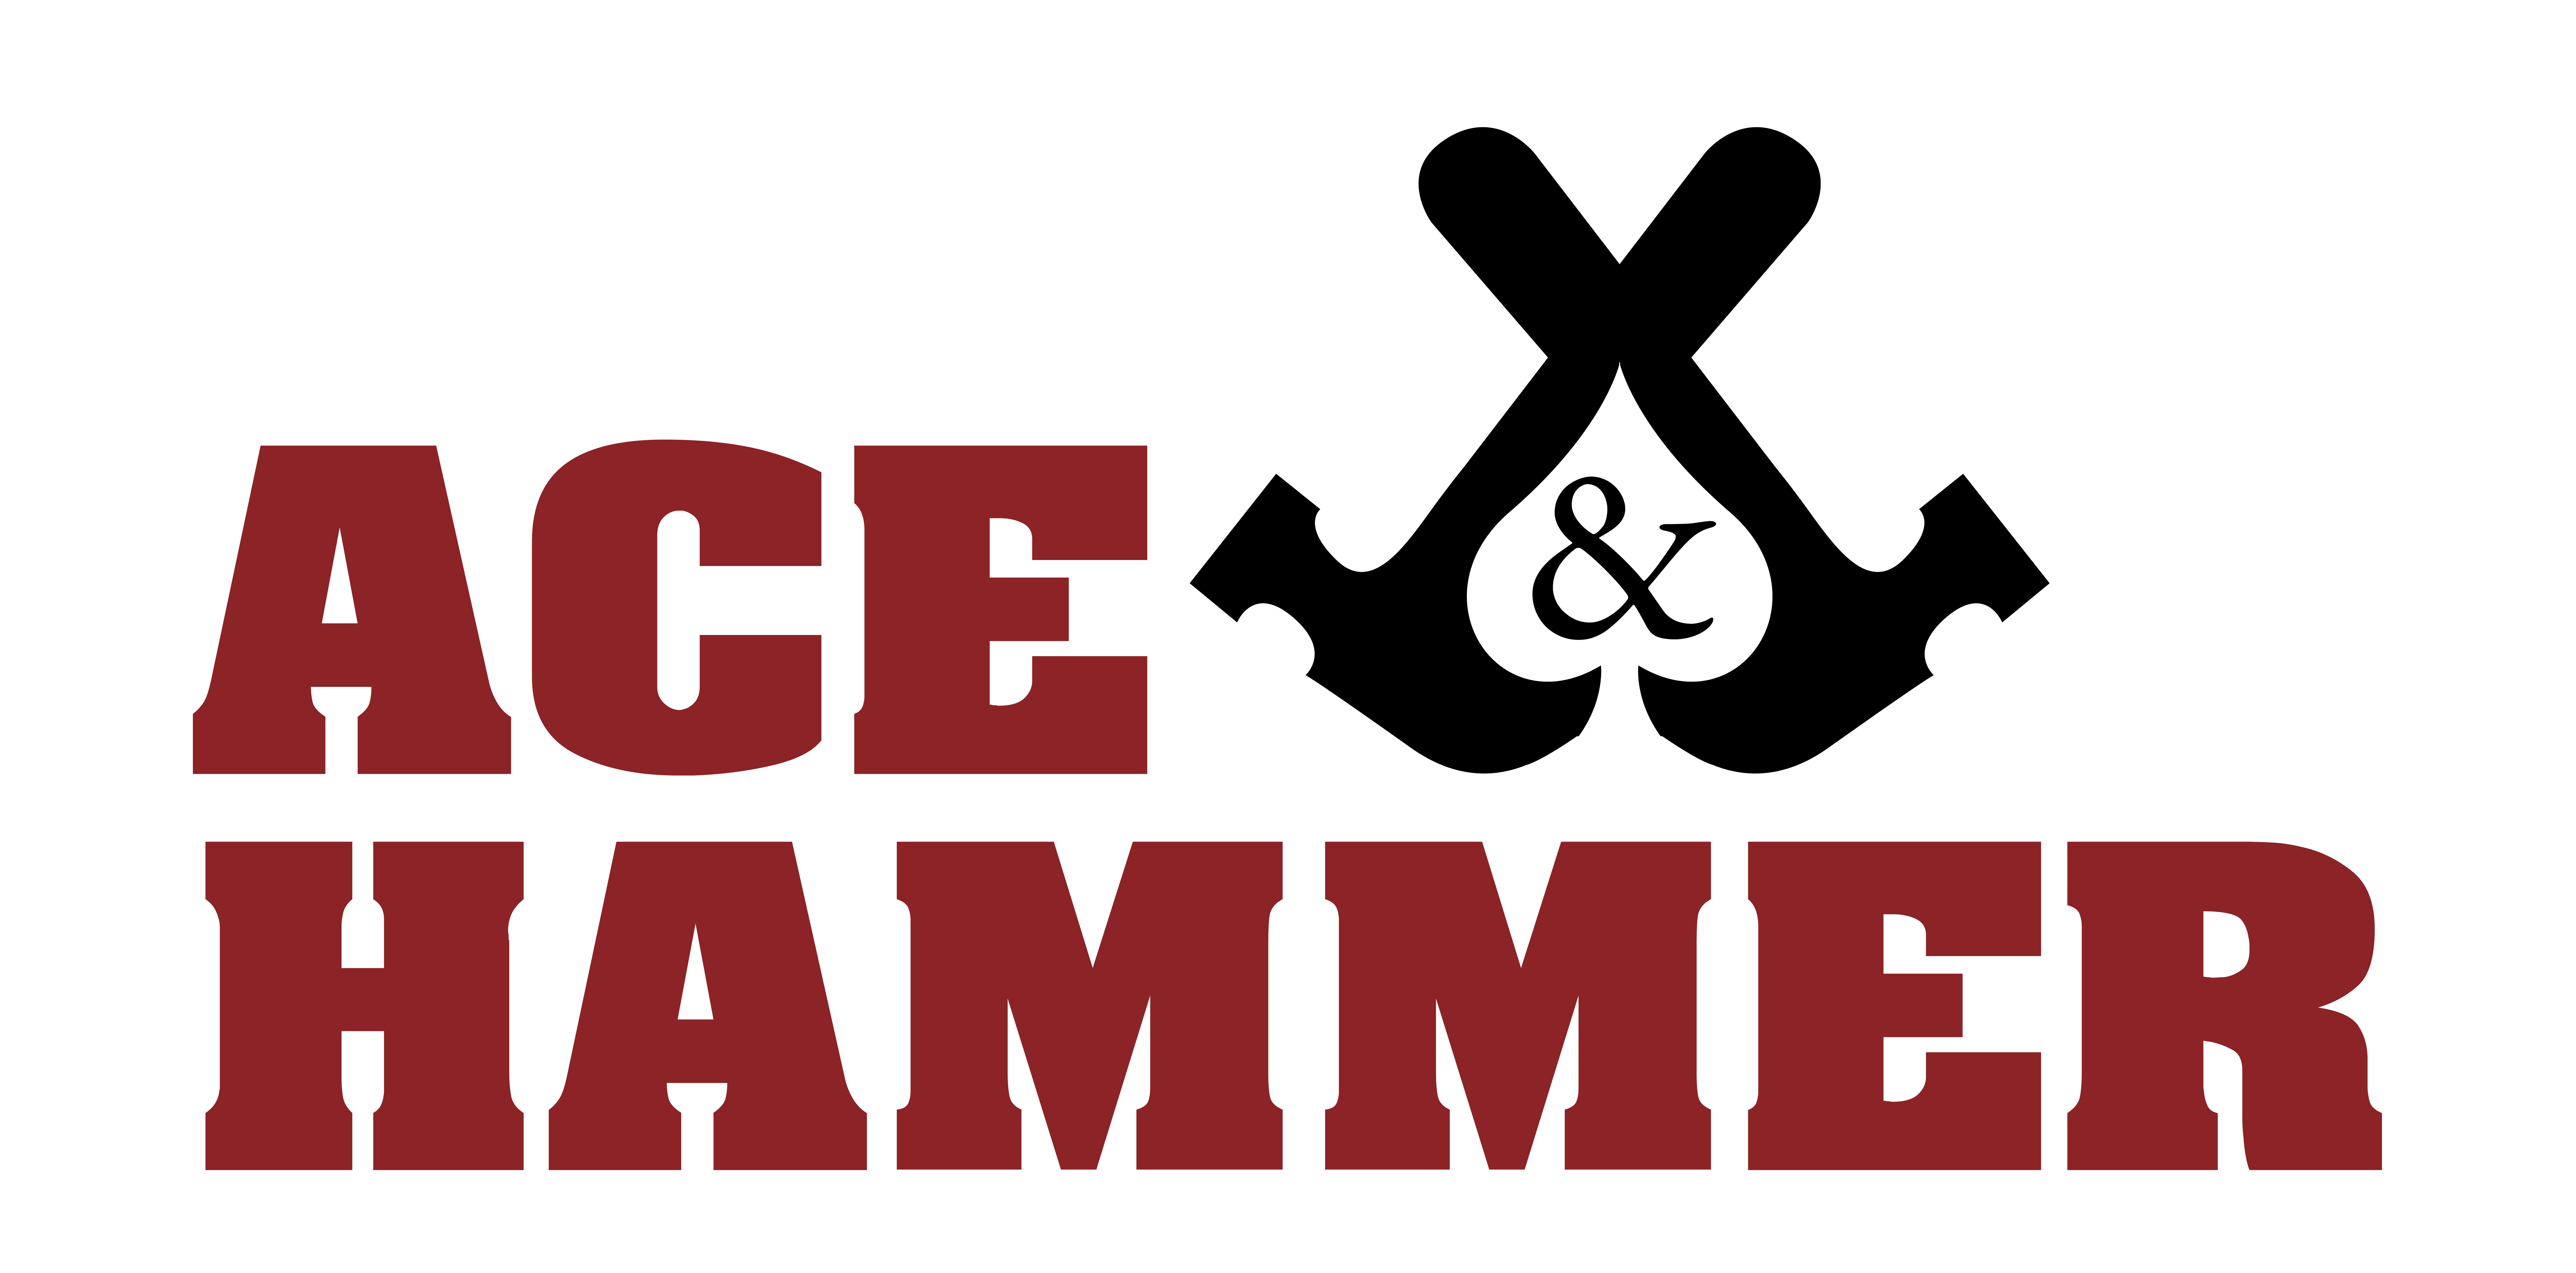 Ace & Hammer Logo